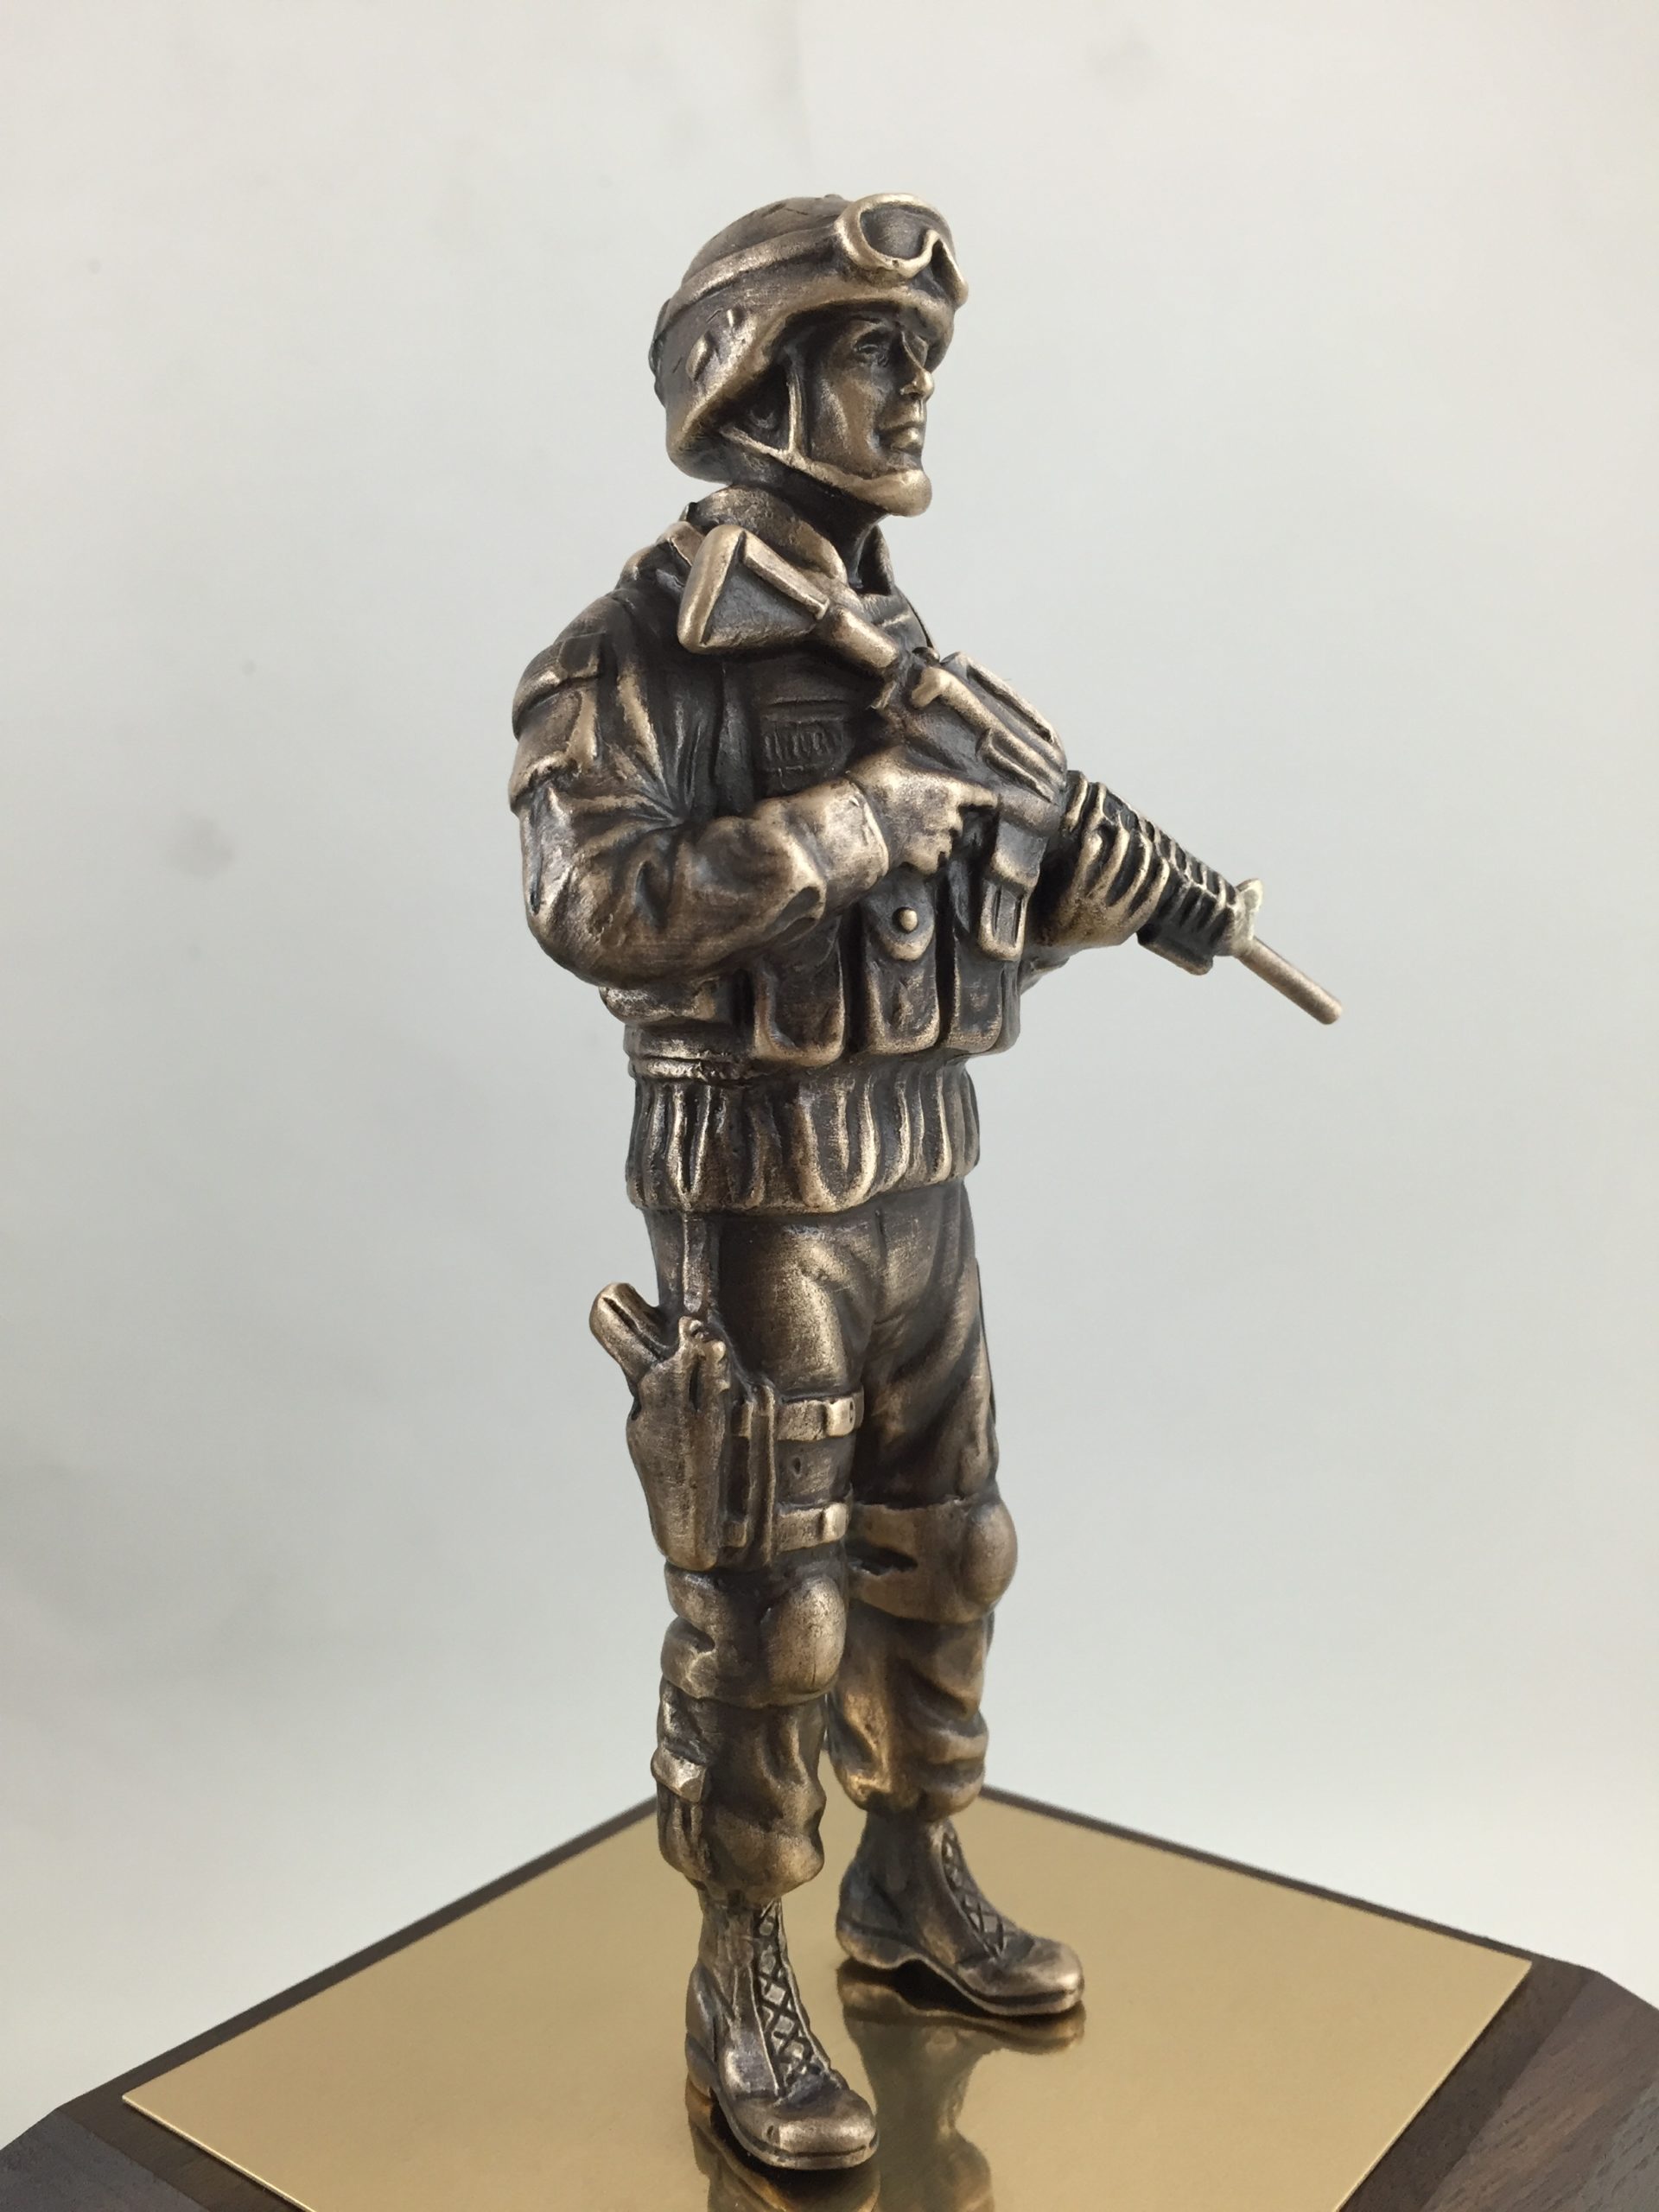 u.s. soldier statue replica